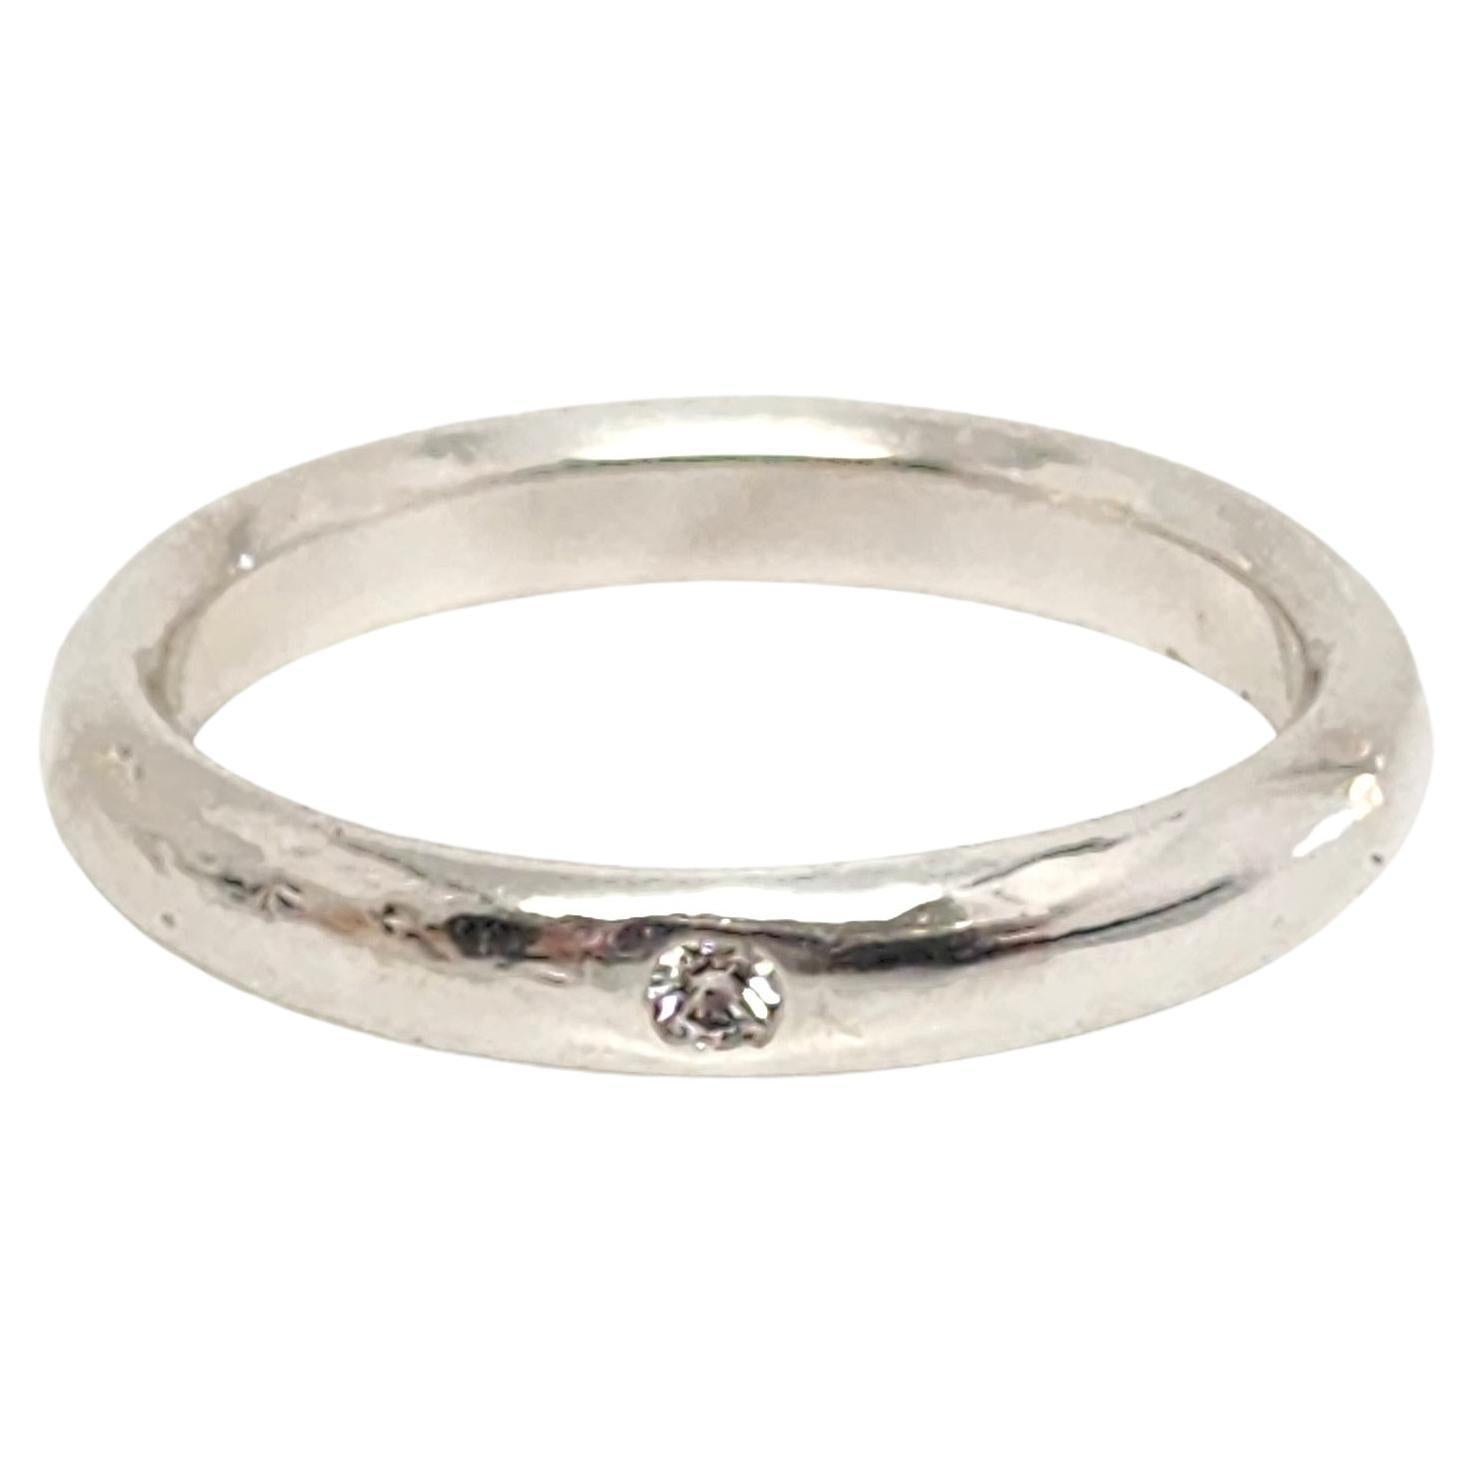 Tiffany & Co. Elsa Peretti Sterling Silver Diamond Band Ring